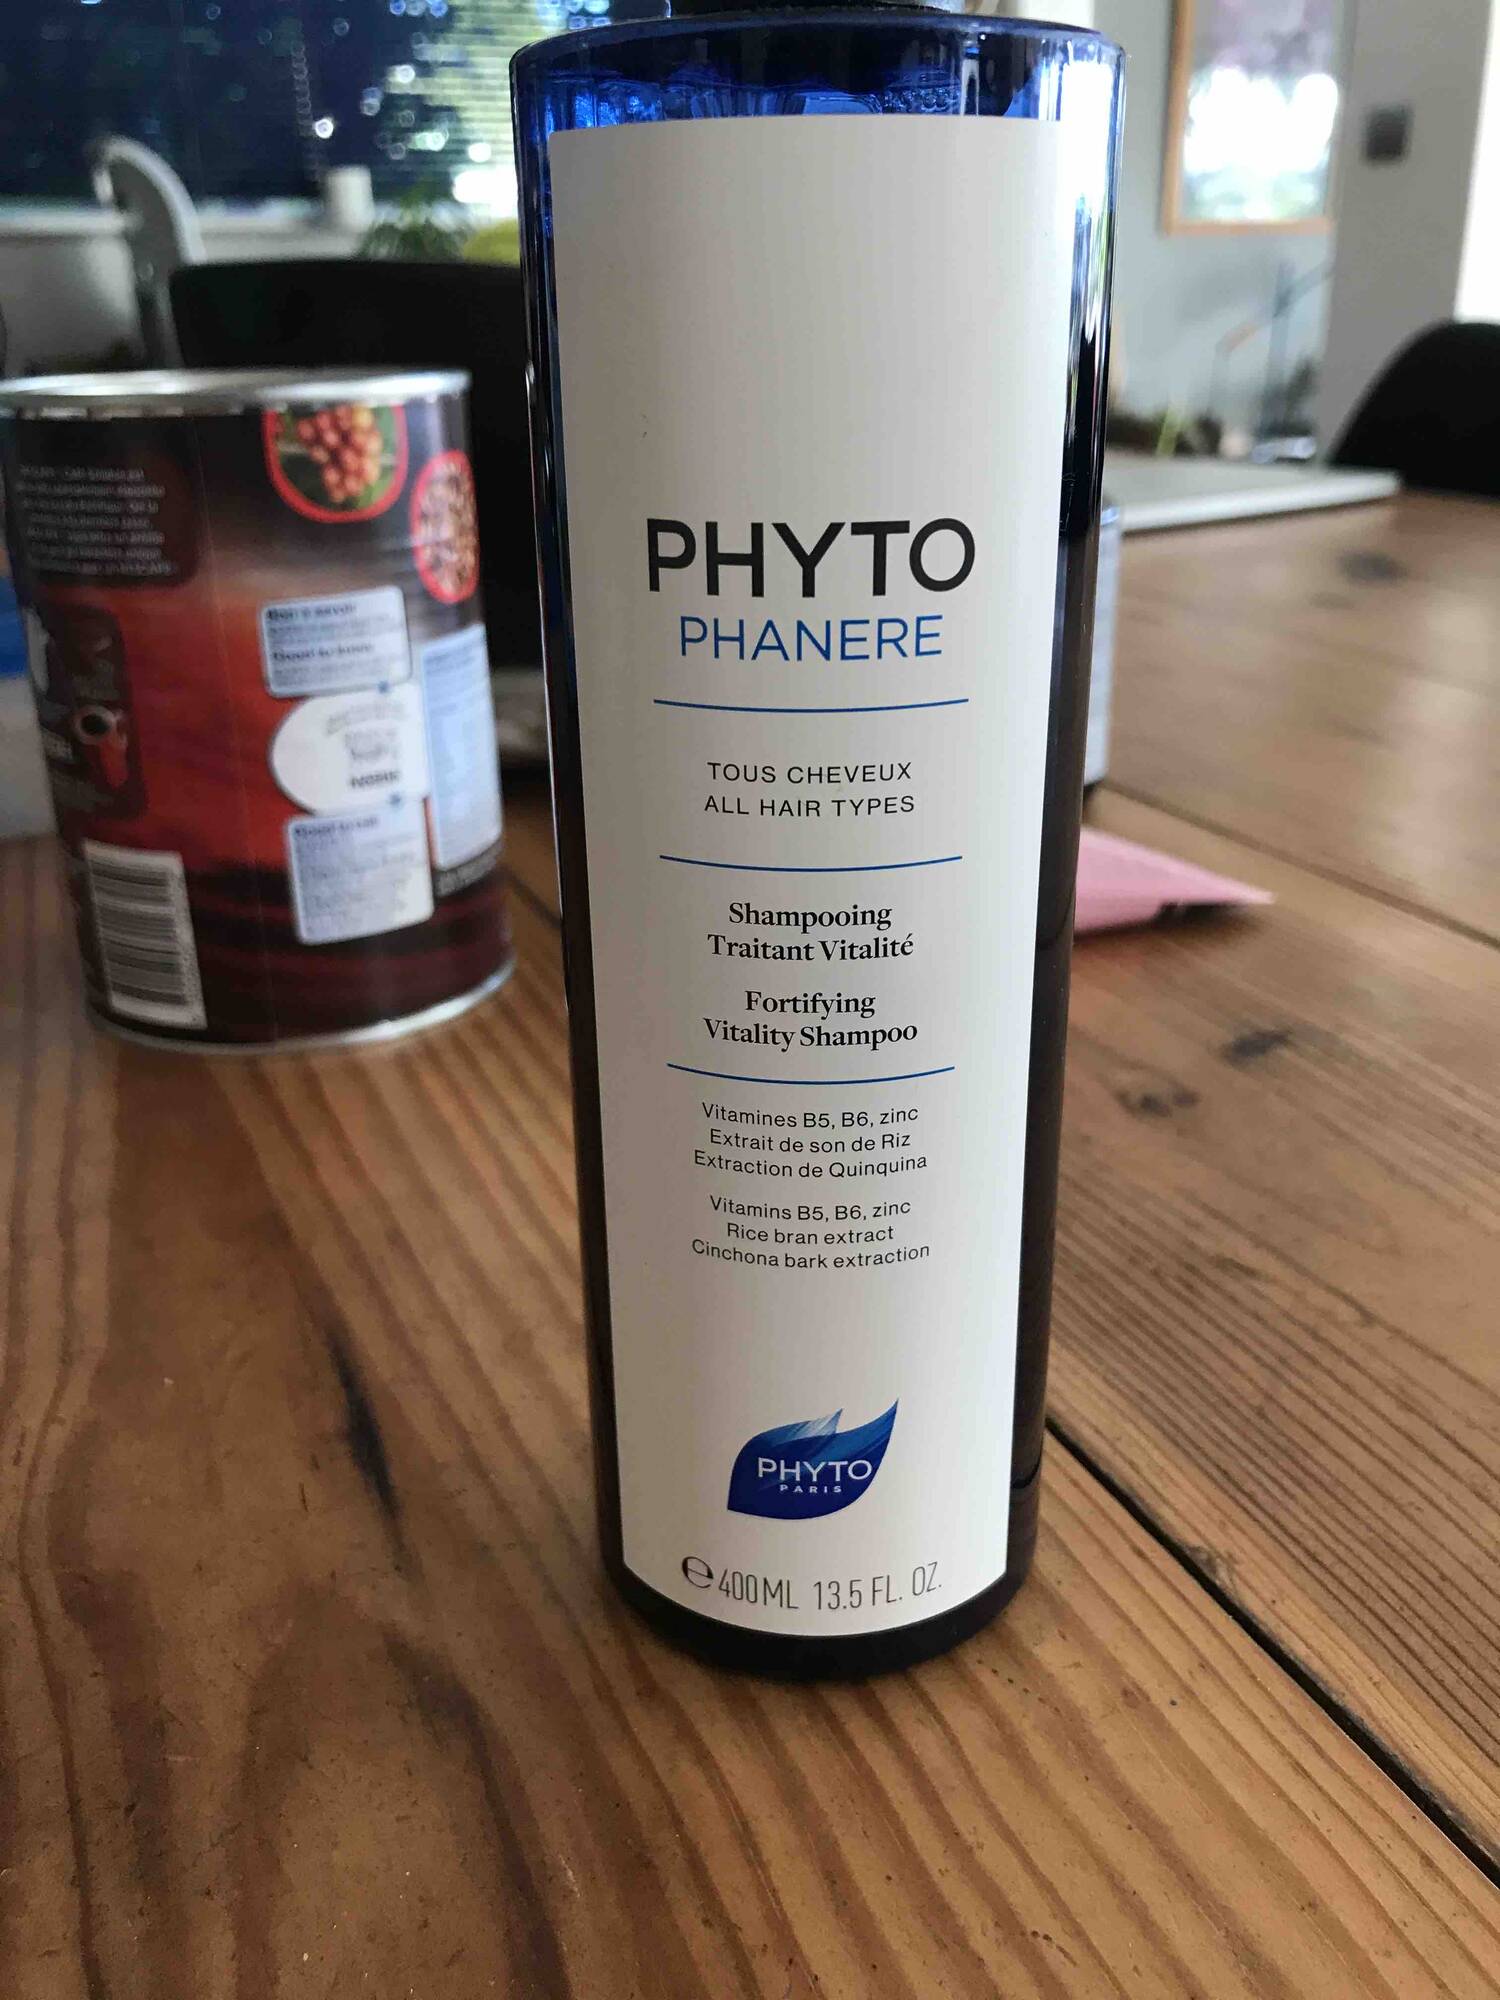 PHYTO - Phanere - Shampooing traitant vitalité